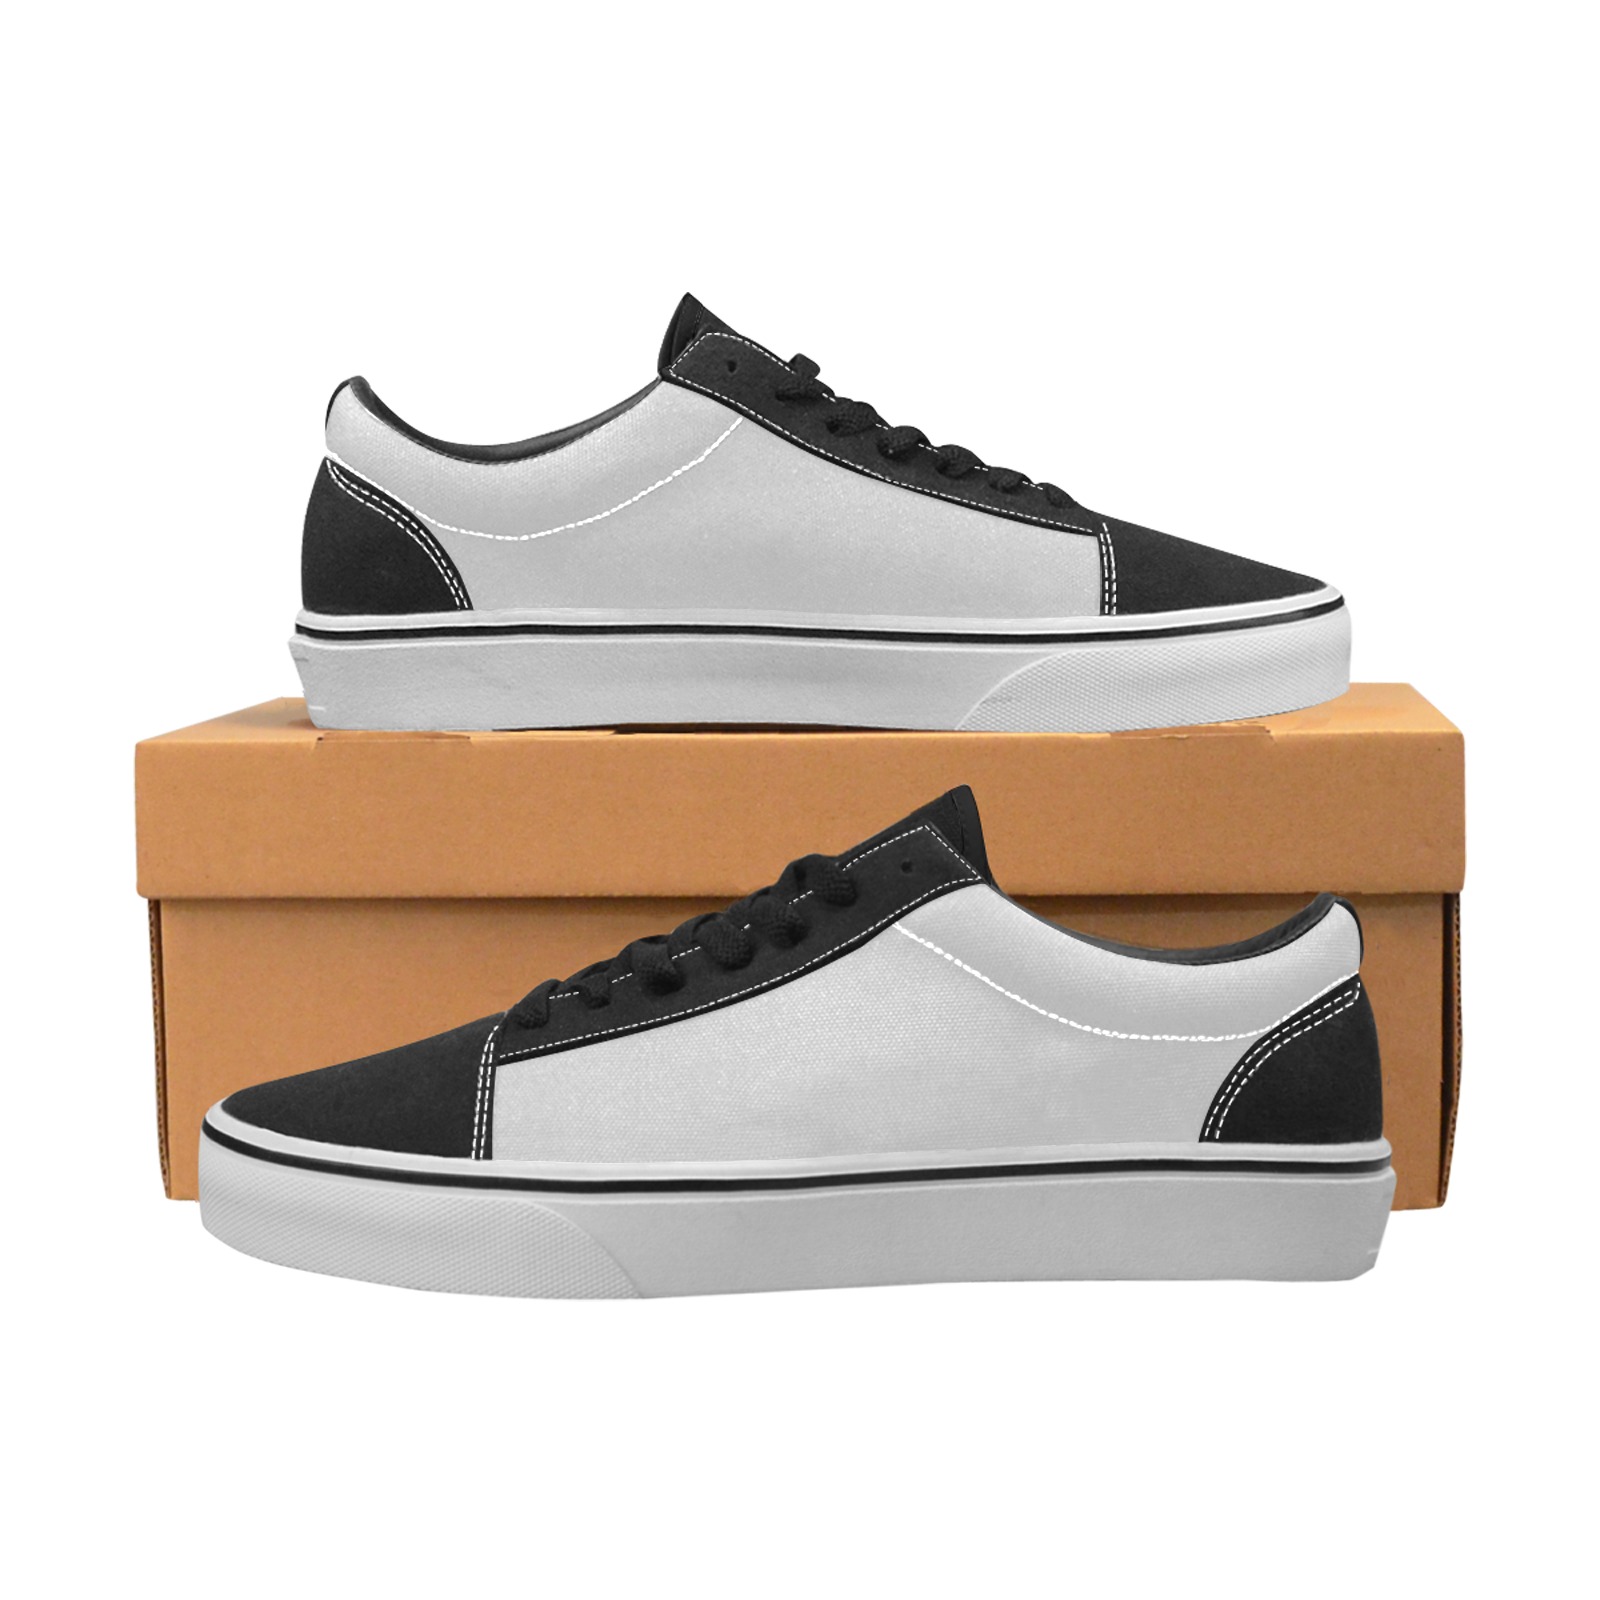 color silver Women's Low Top Skateboarding Shoes (Model E001-2)